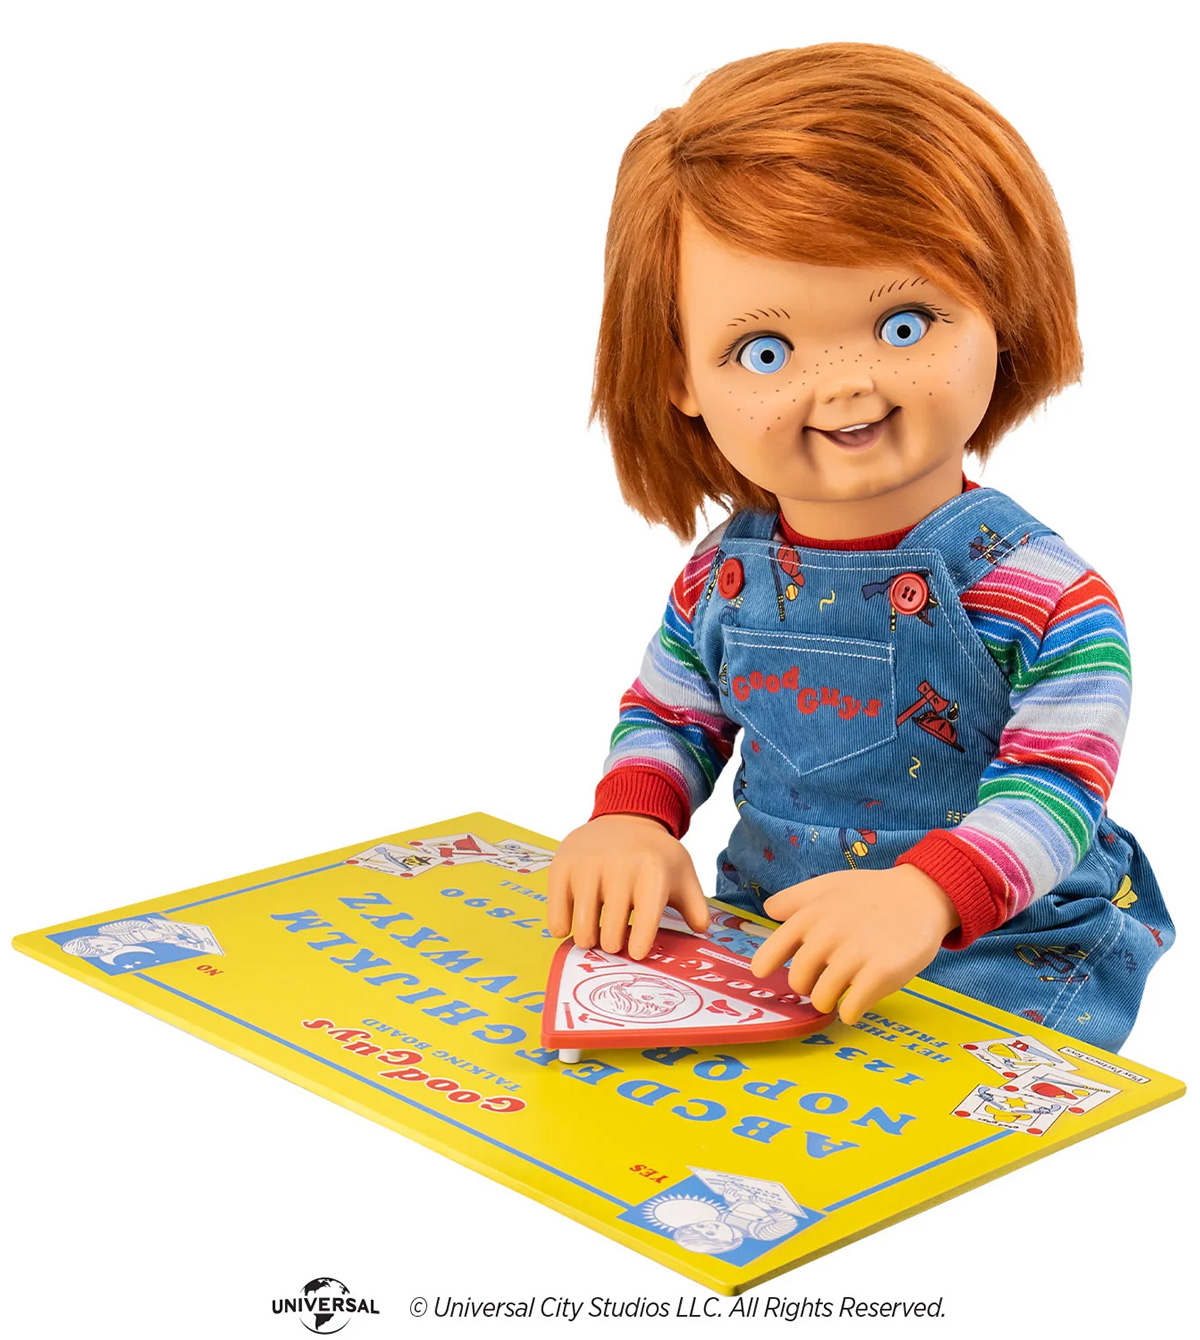 Chucky the Child's Play Ouija Board